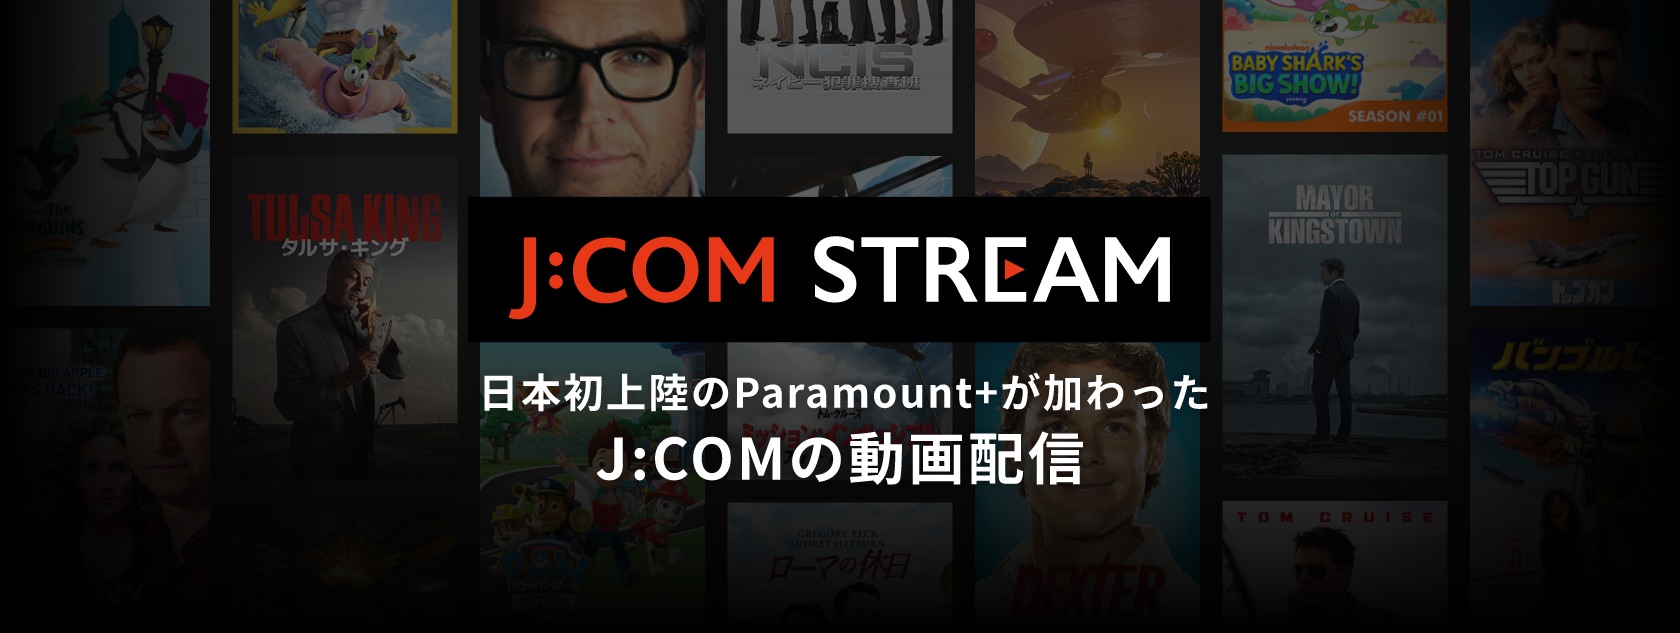 Paramount+が加わったJ:COMの動画配信